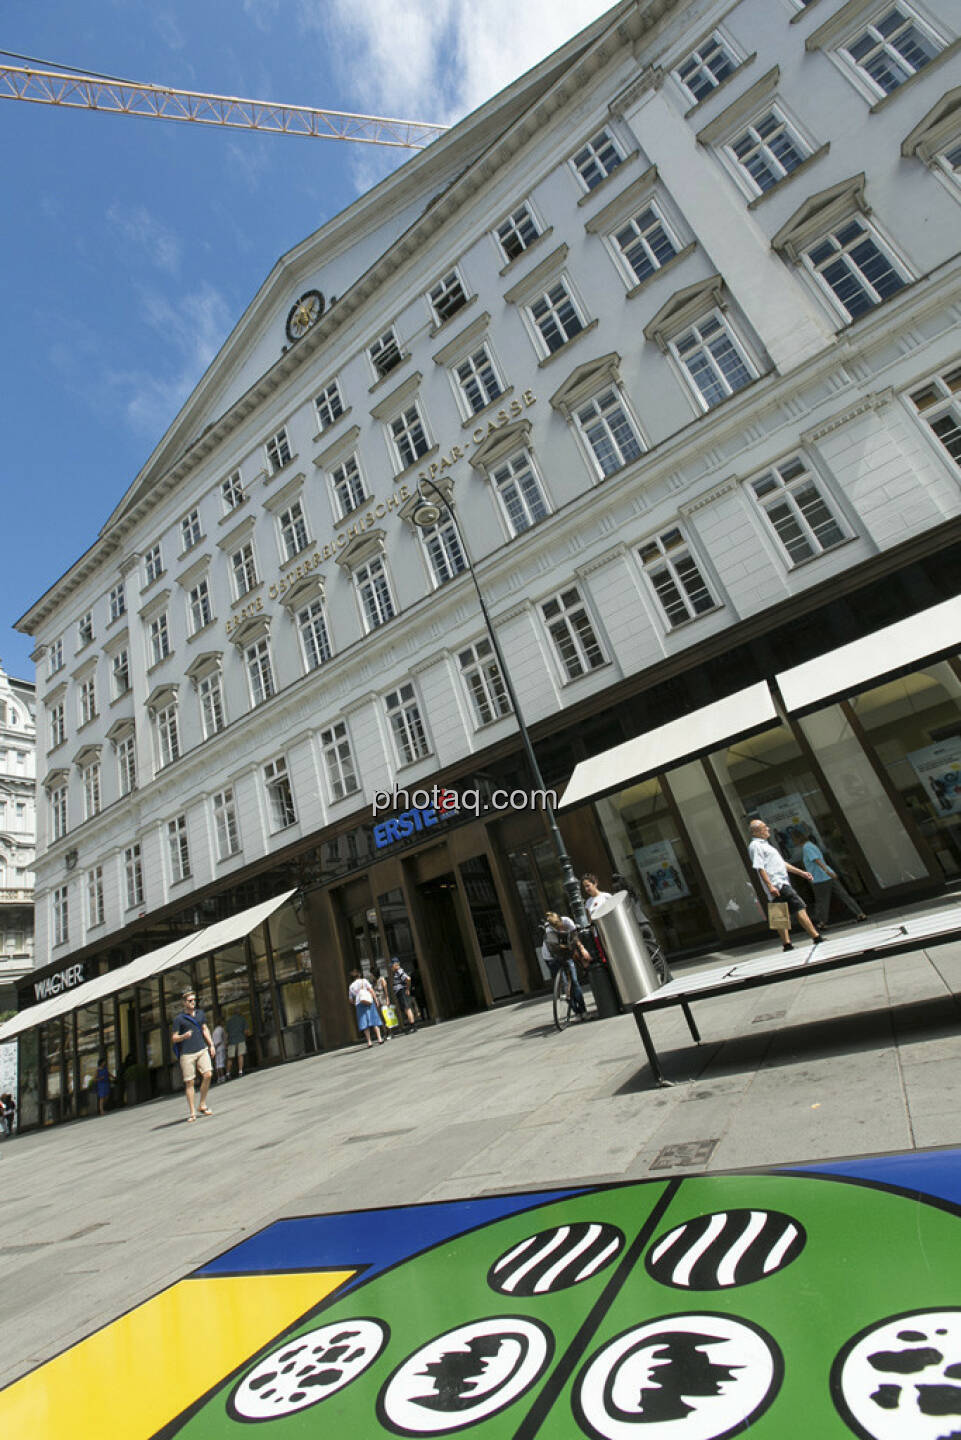 Erste Group Bank AG, Graben 21, 1010 Wien